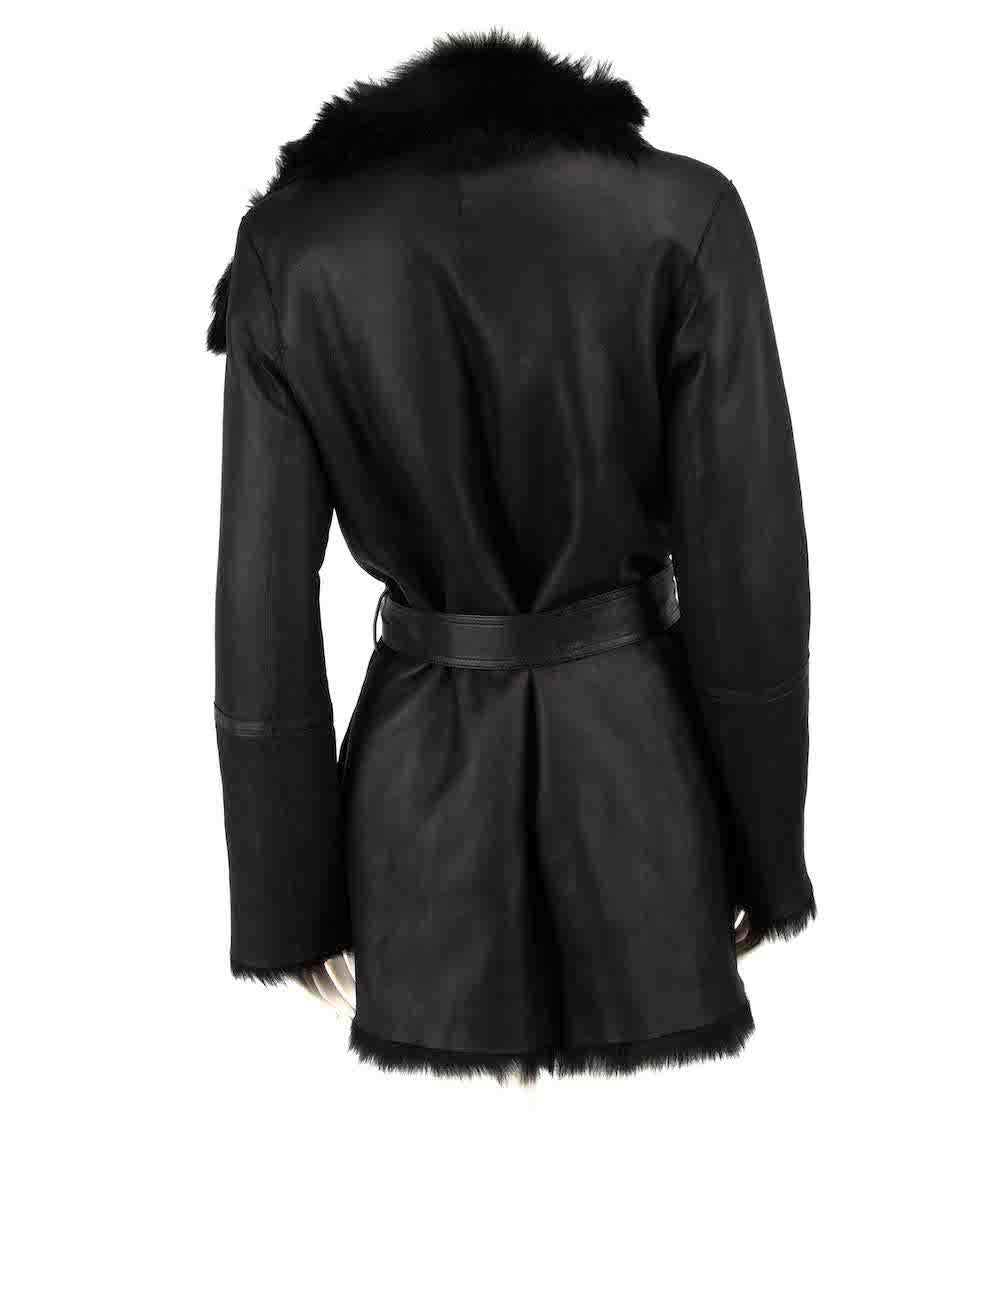 Women's Unbranded Black Shearling Fur Leather Reversible Coat Size M